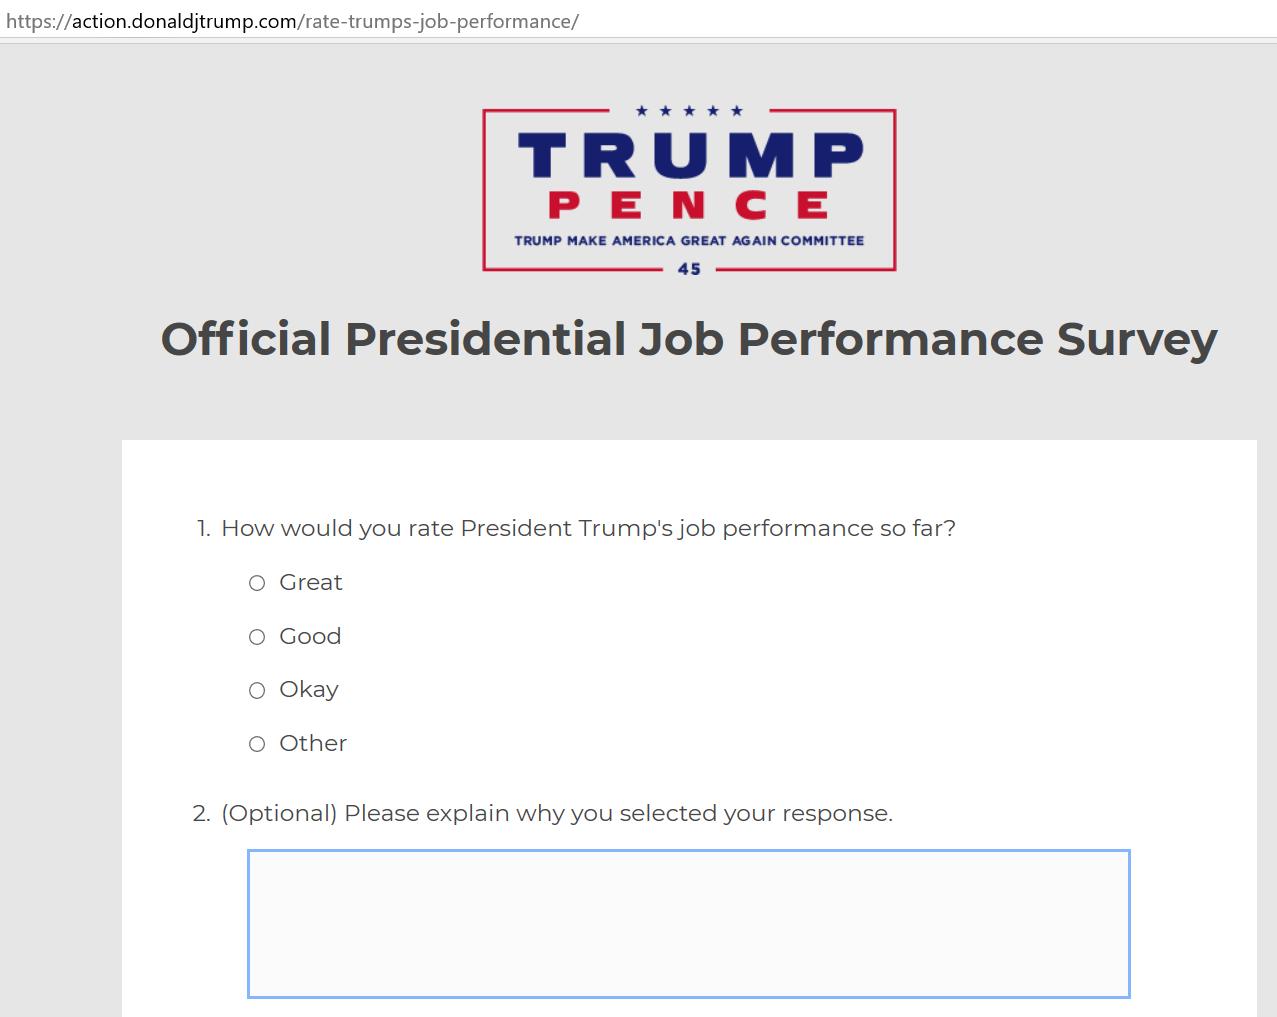 Slighty problematic survey question. Source: [badsurveyq](https://twitter.com/badsurveyq)